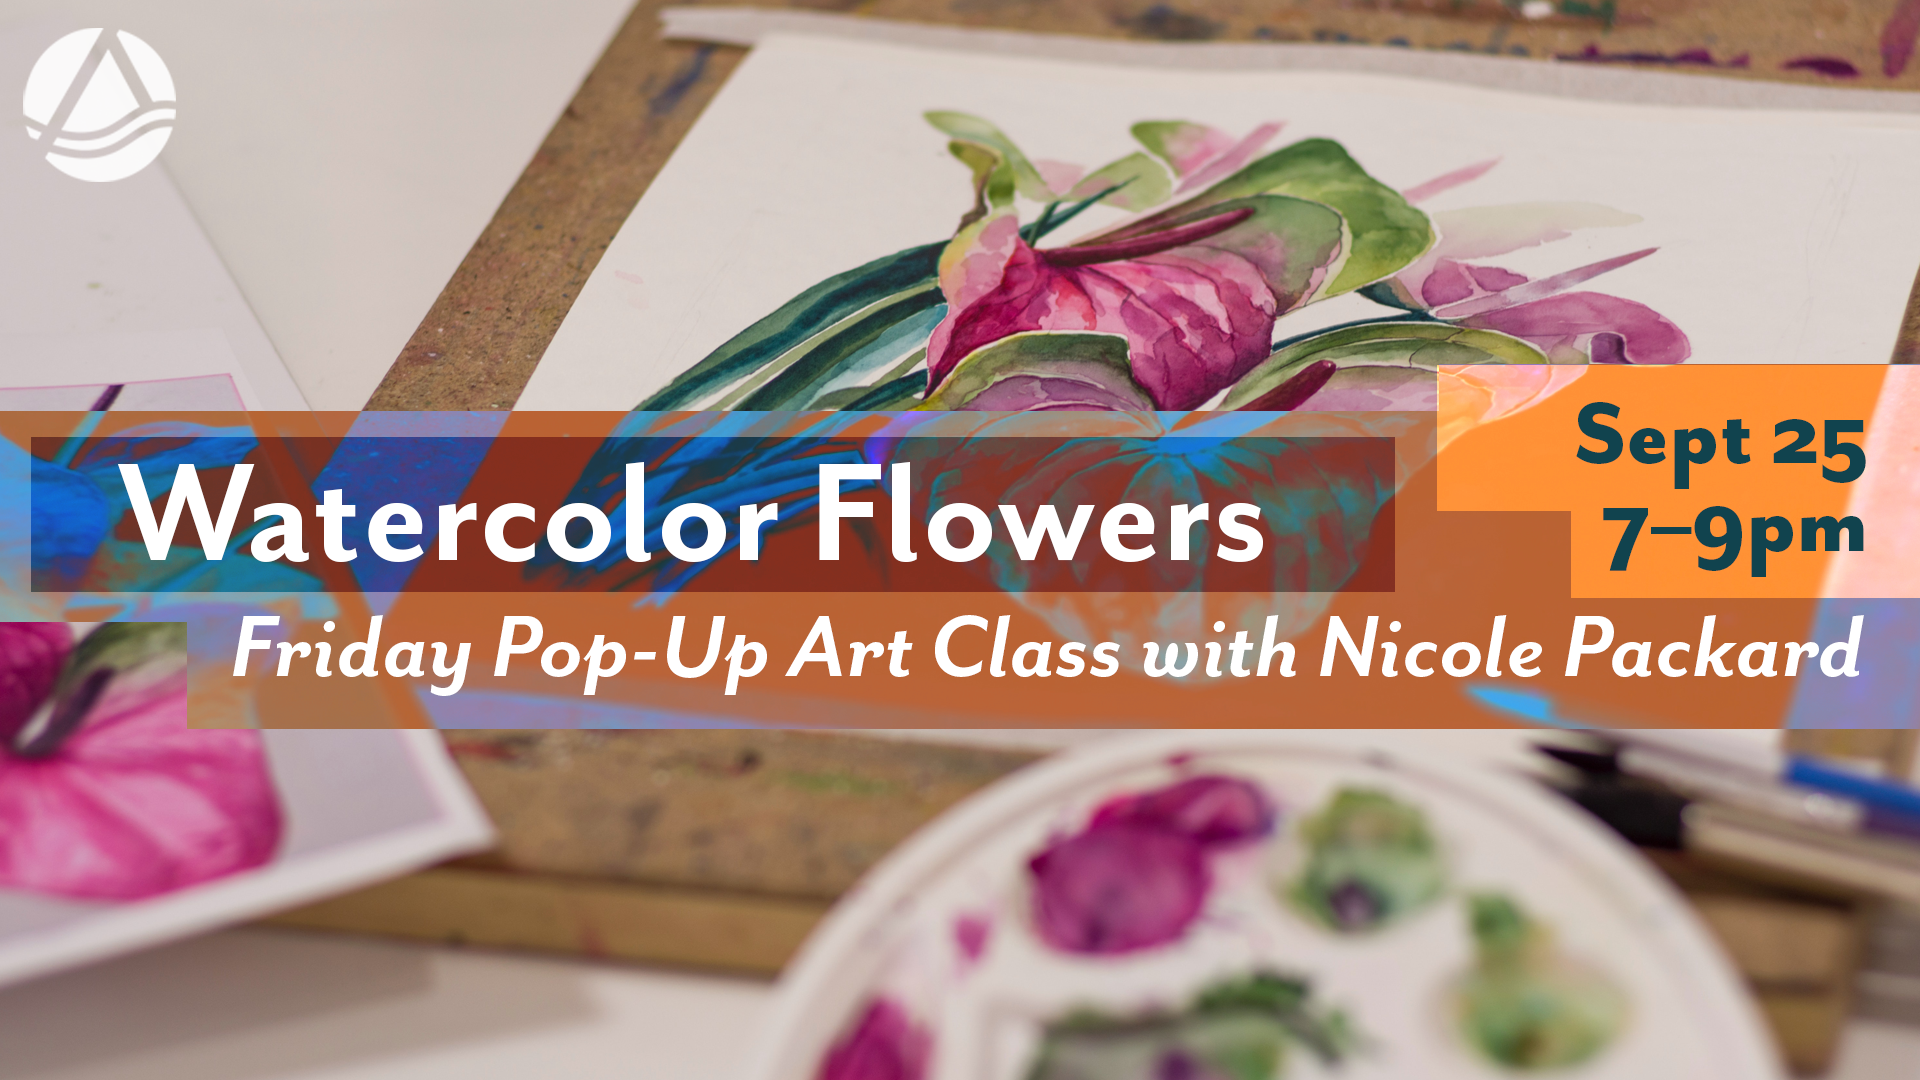 Watercolor Flowers - Pop-Up Art Class Online via Zoom August 17, 2020